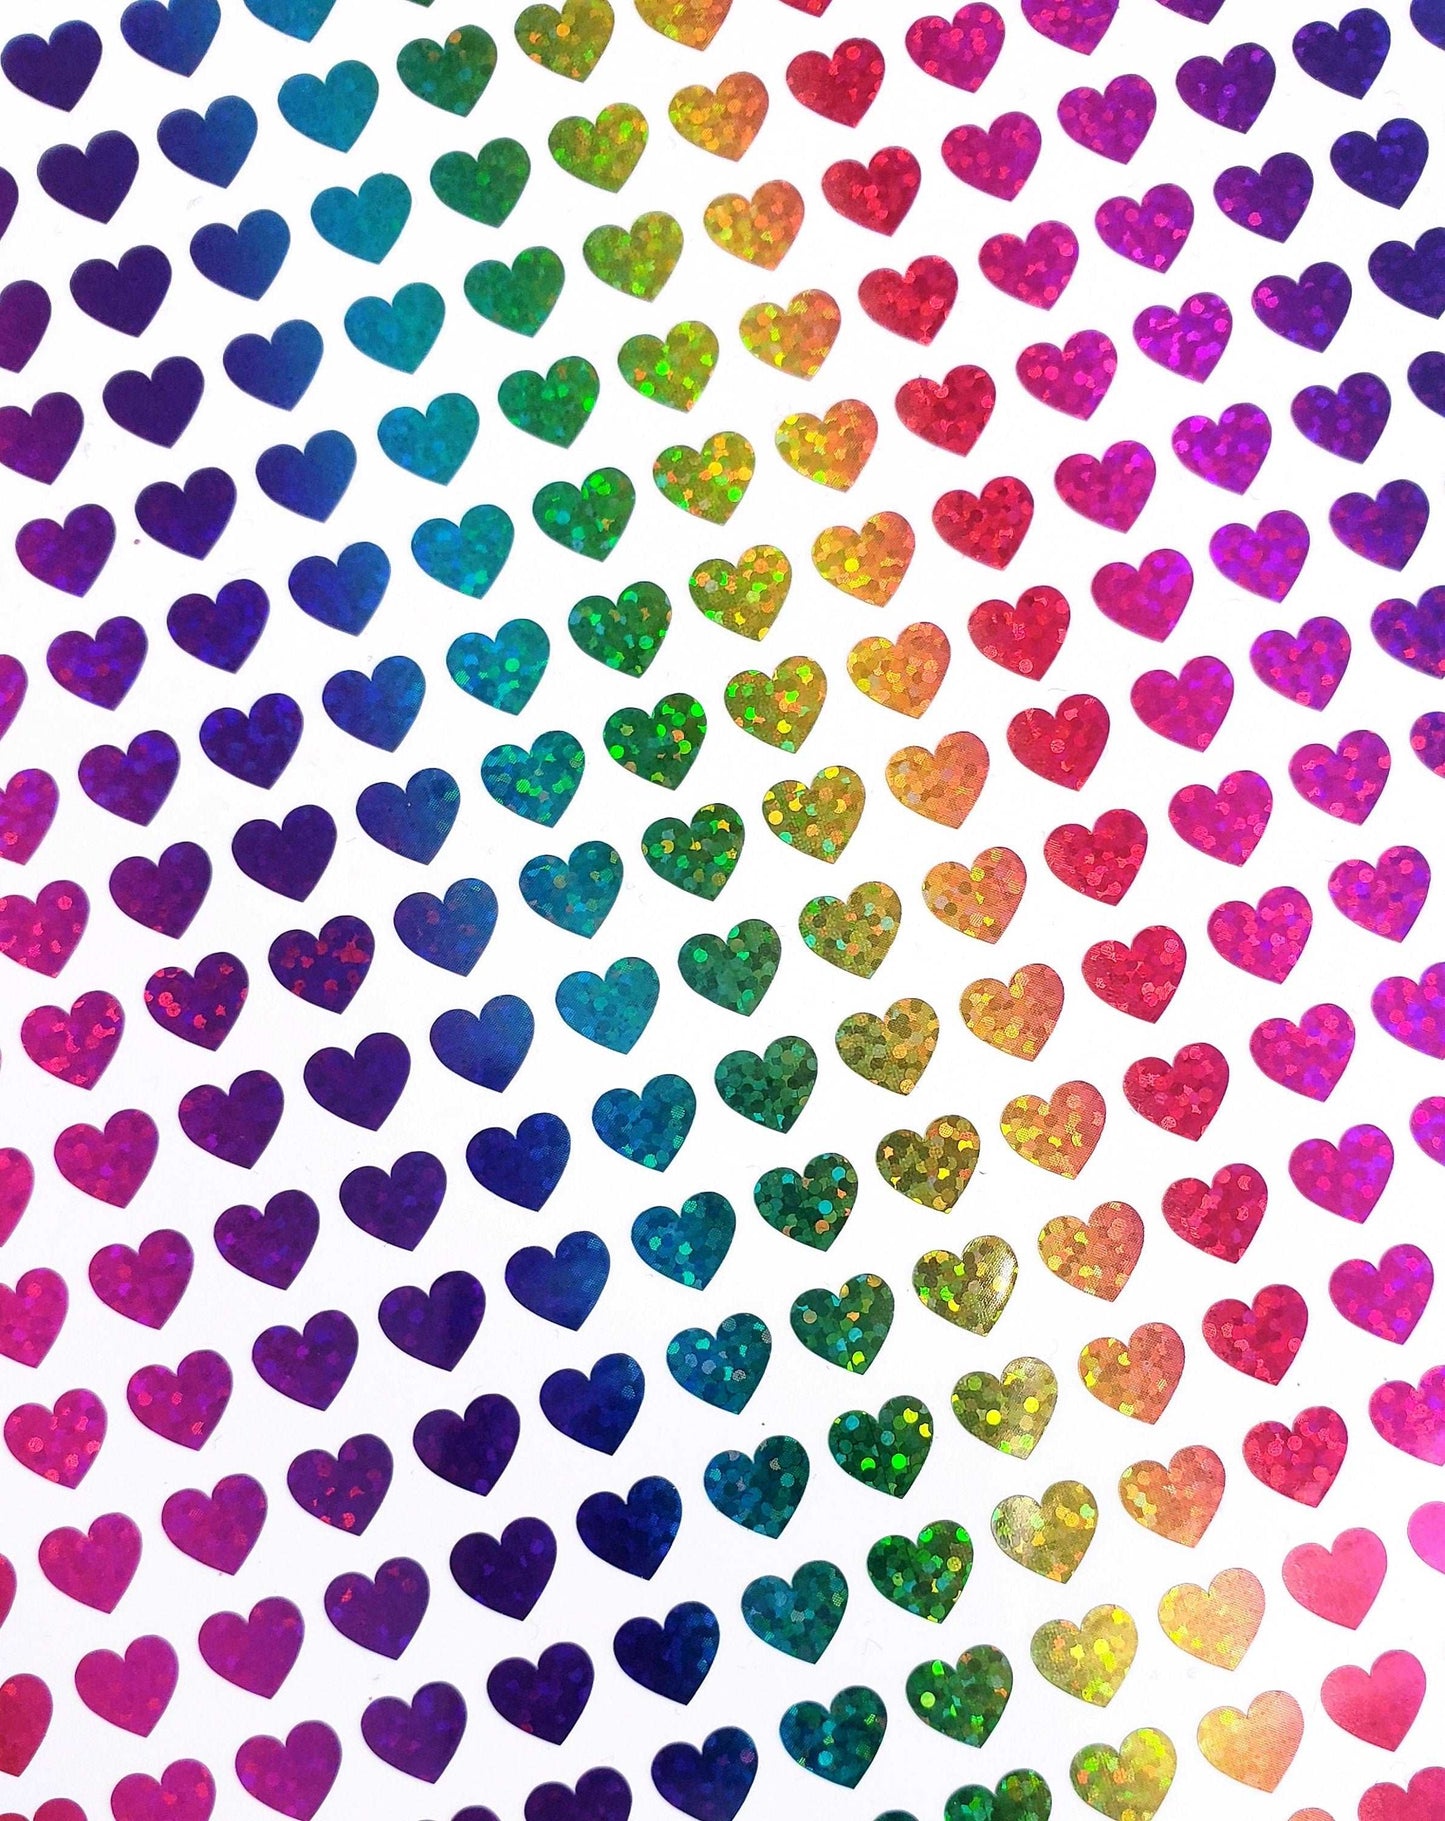 Small Rainbow Hearts Sticker Sheet, set of 285 rainbow glitter hearts.